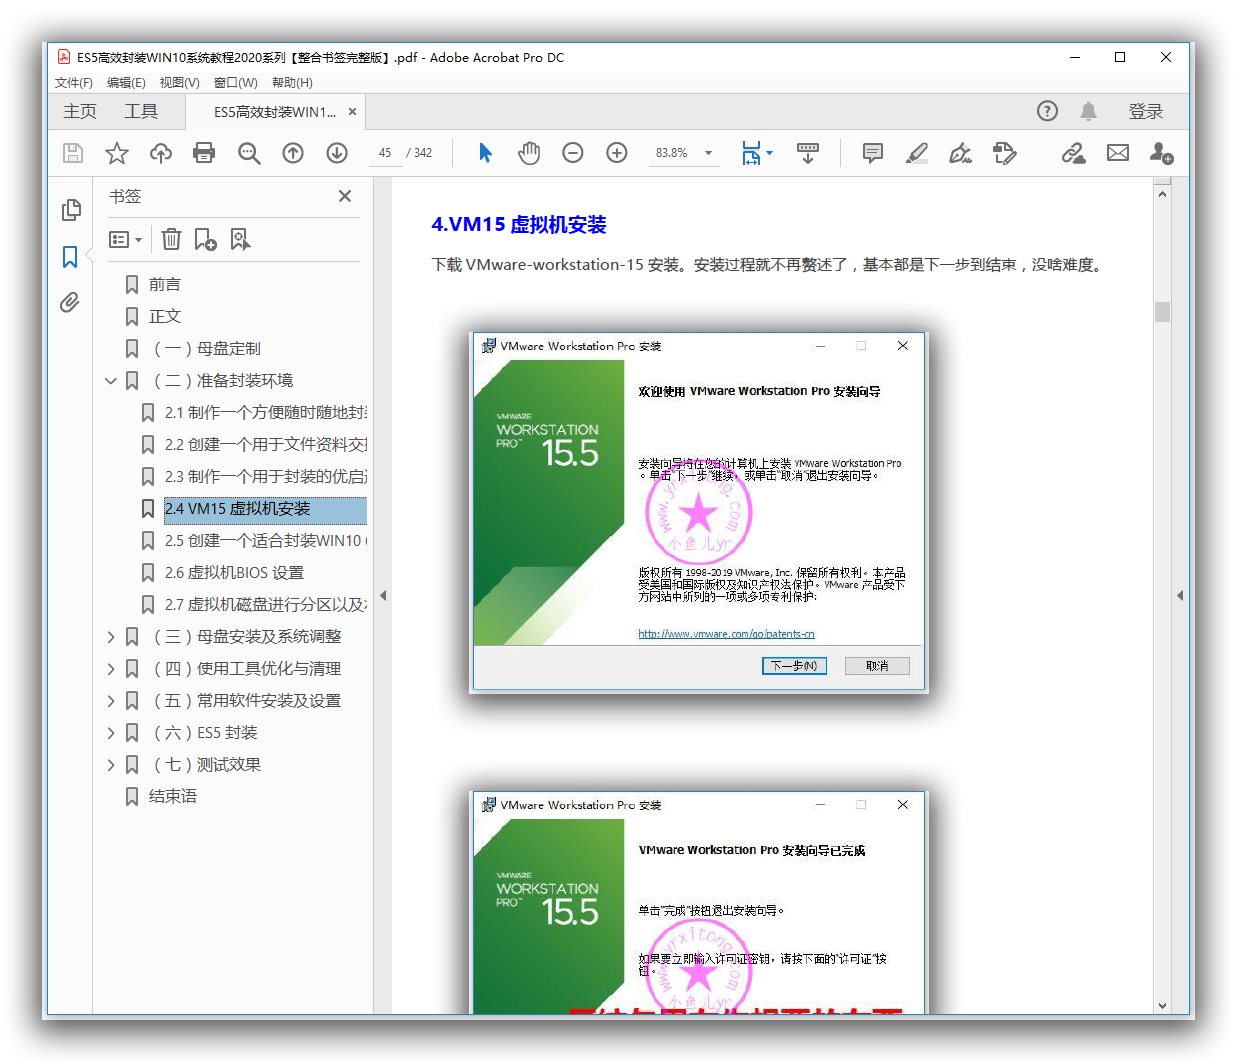 ES5高效封装WIN10系统教程2020系列电子书合集及PDF文档【完整版】